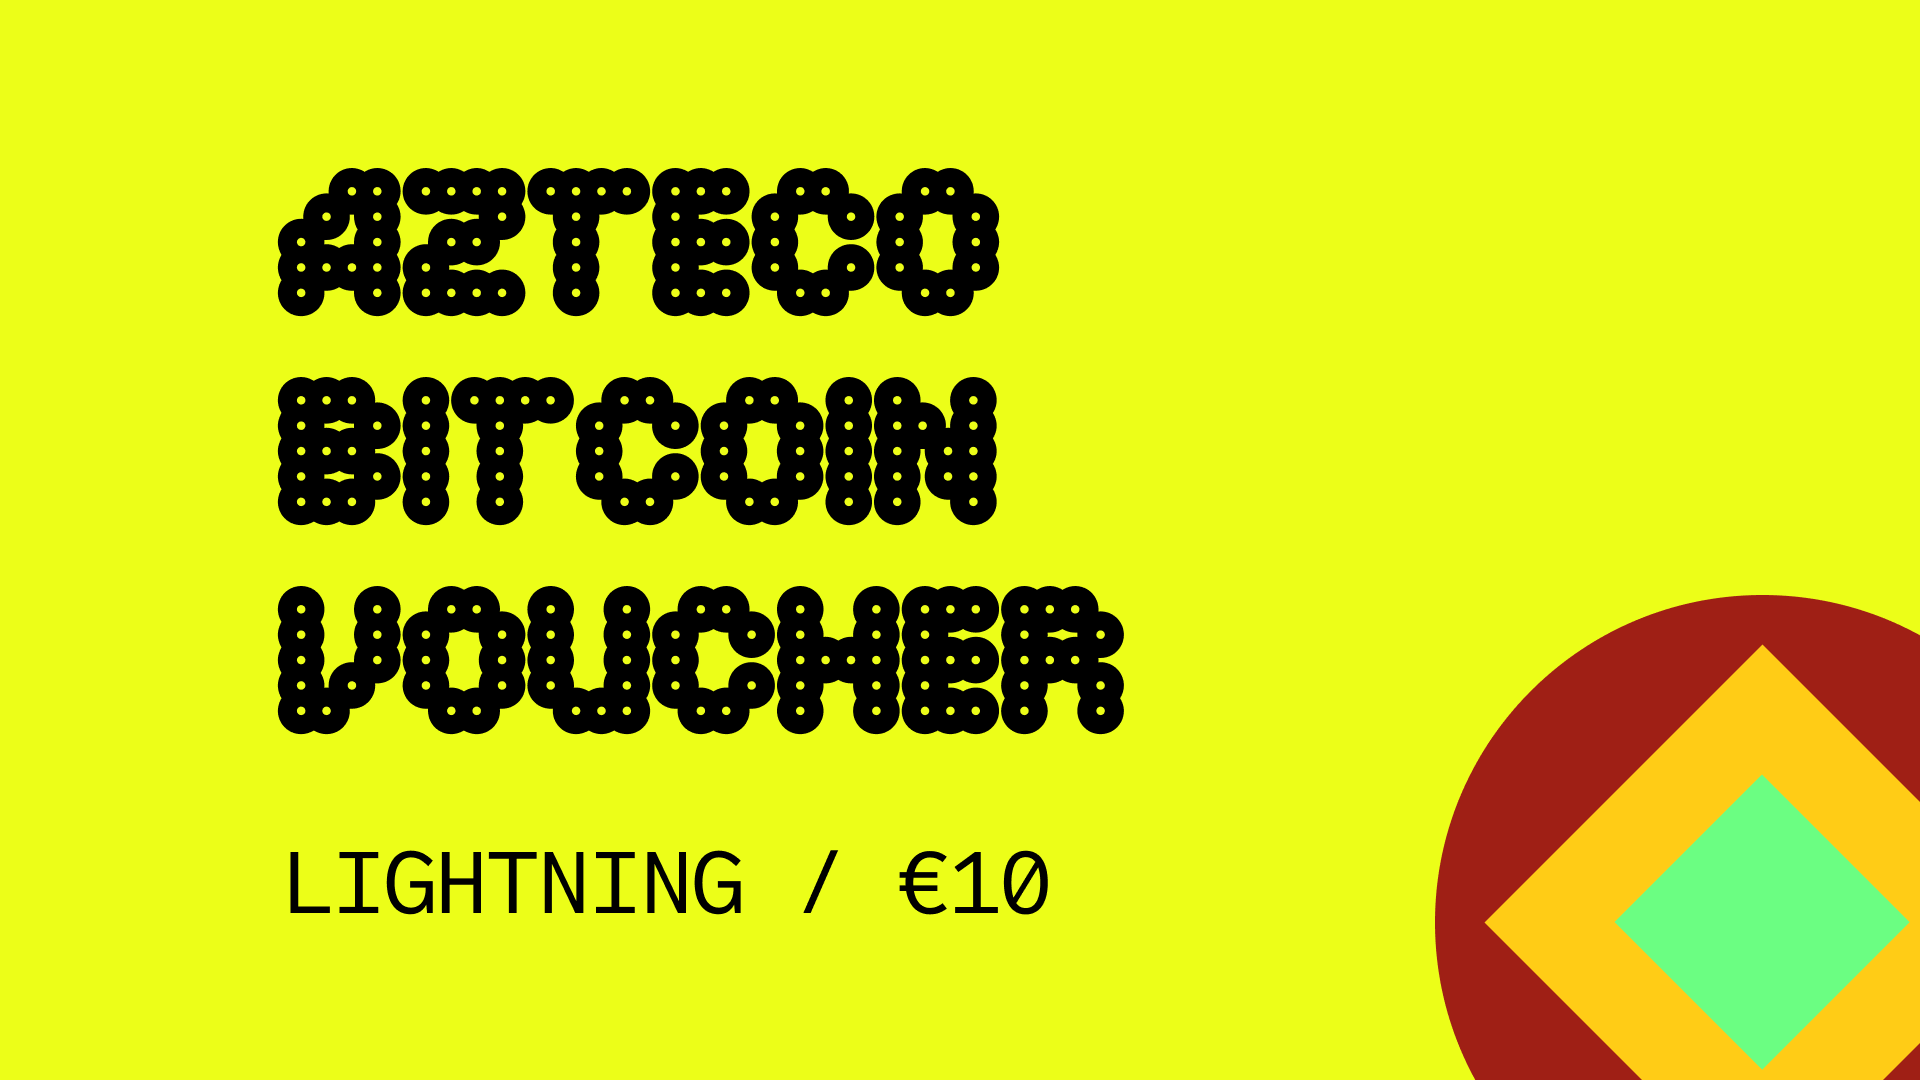 Azteco Bitcoin Lighting €10 Voucher 11.3 $